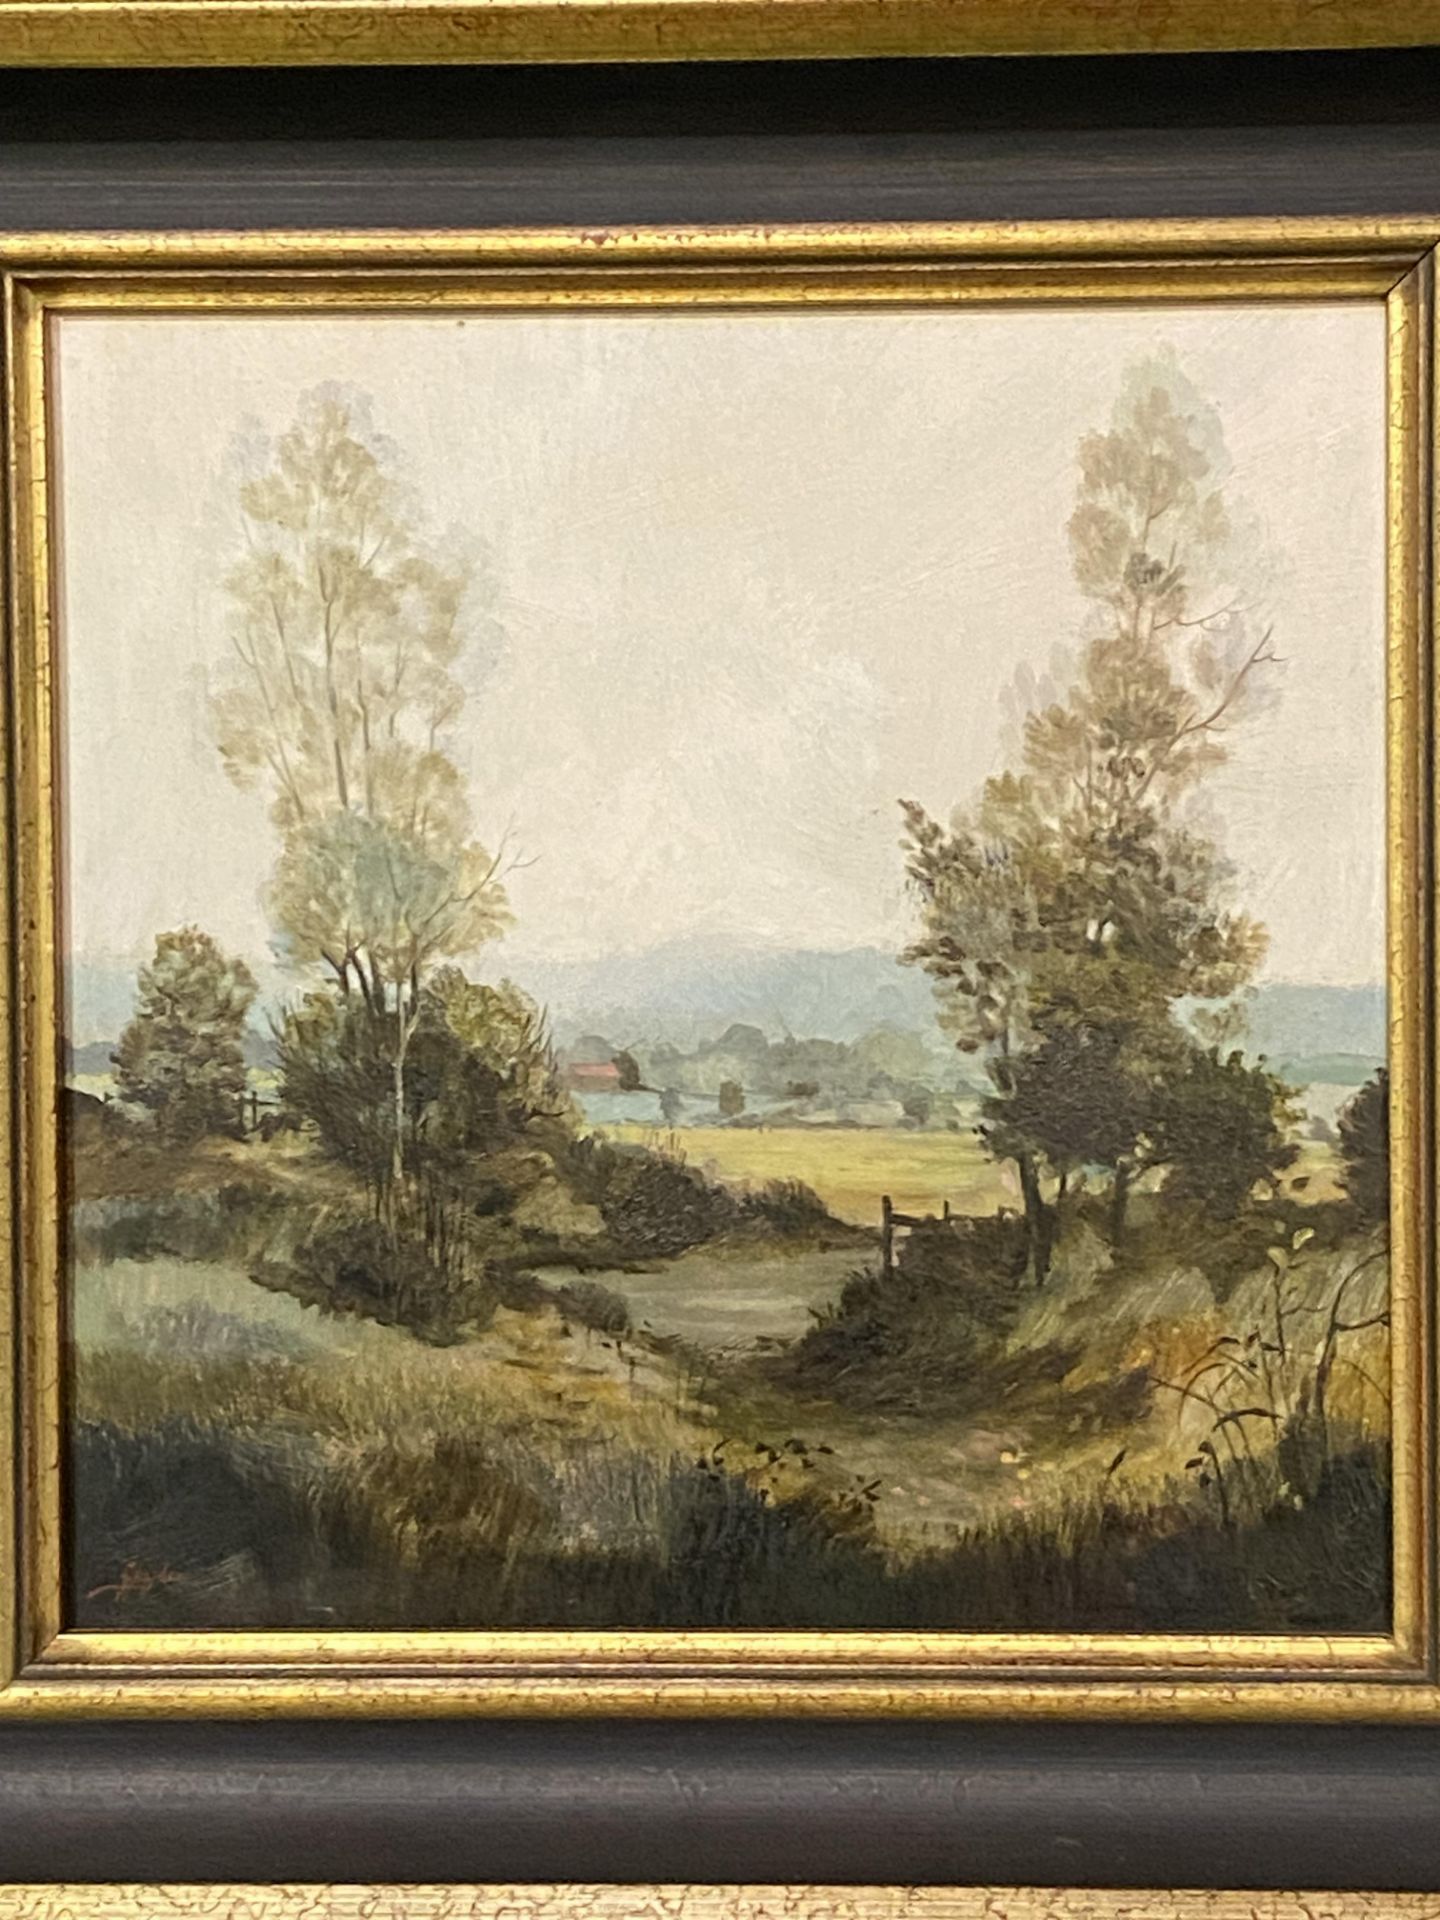 Framed oil on board of a landscape signed by artist, G Hughes - Image 2 of 5